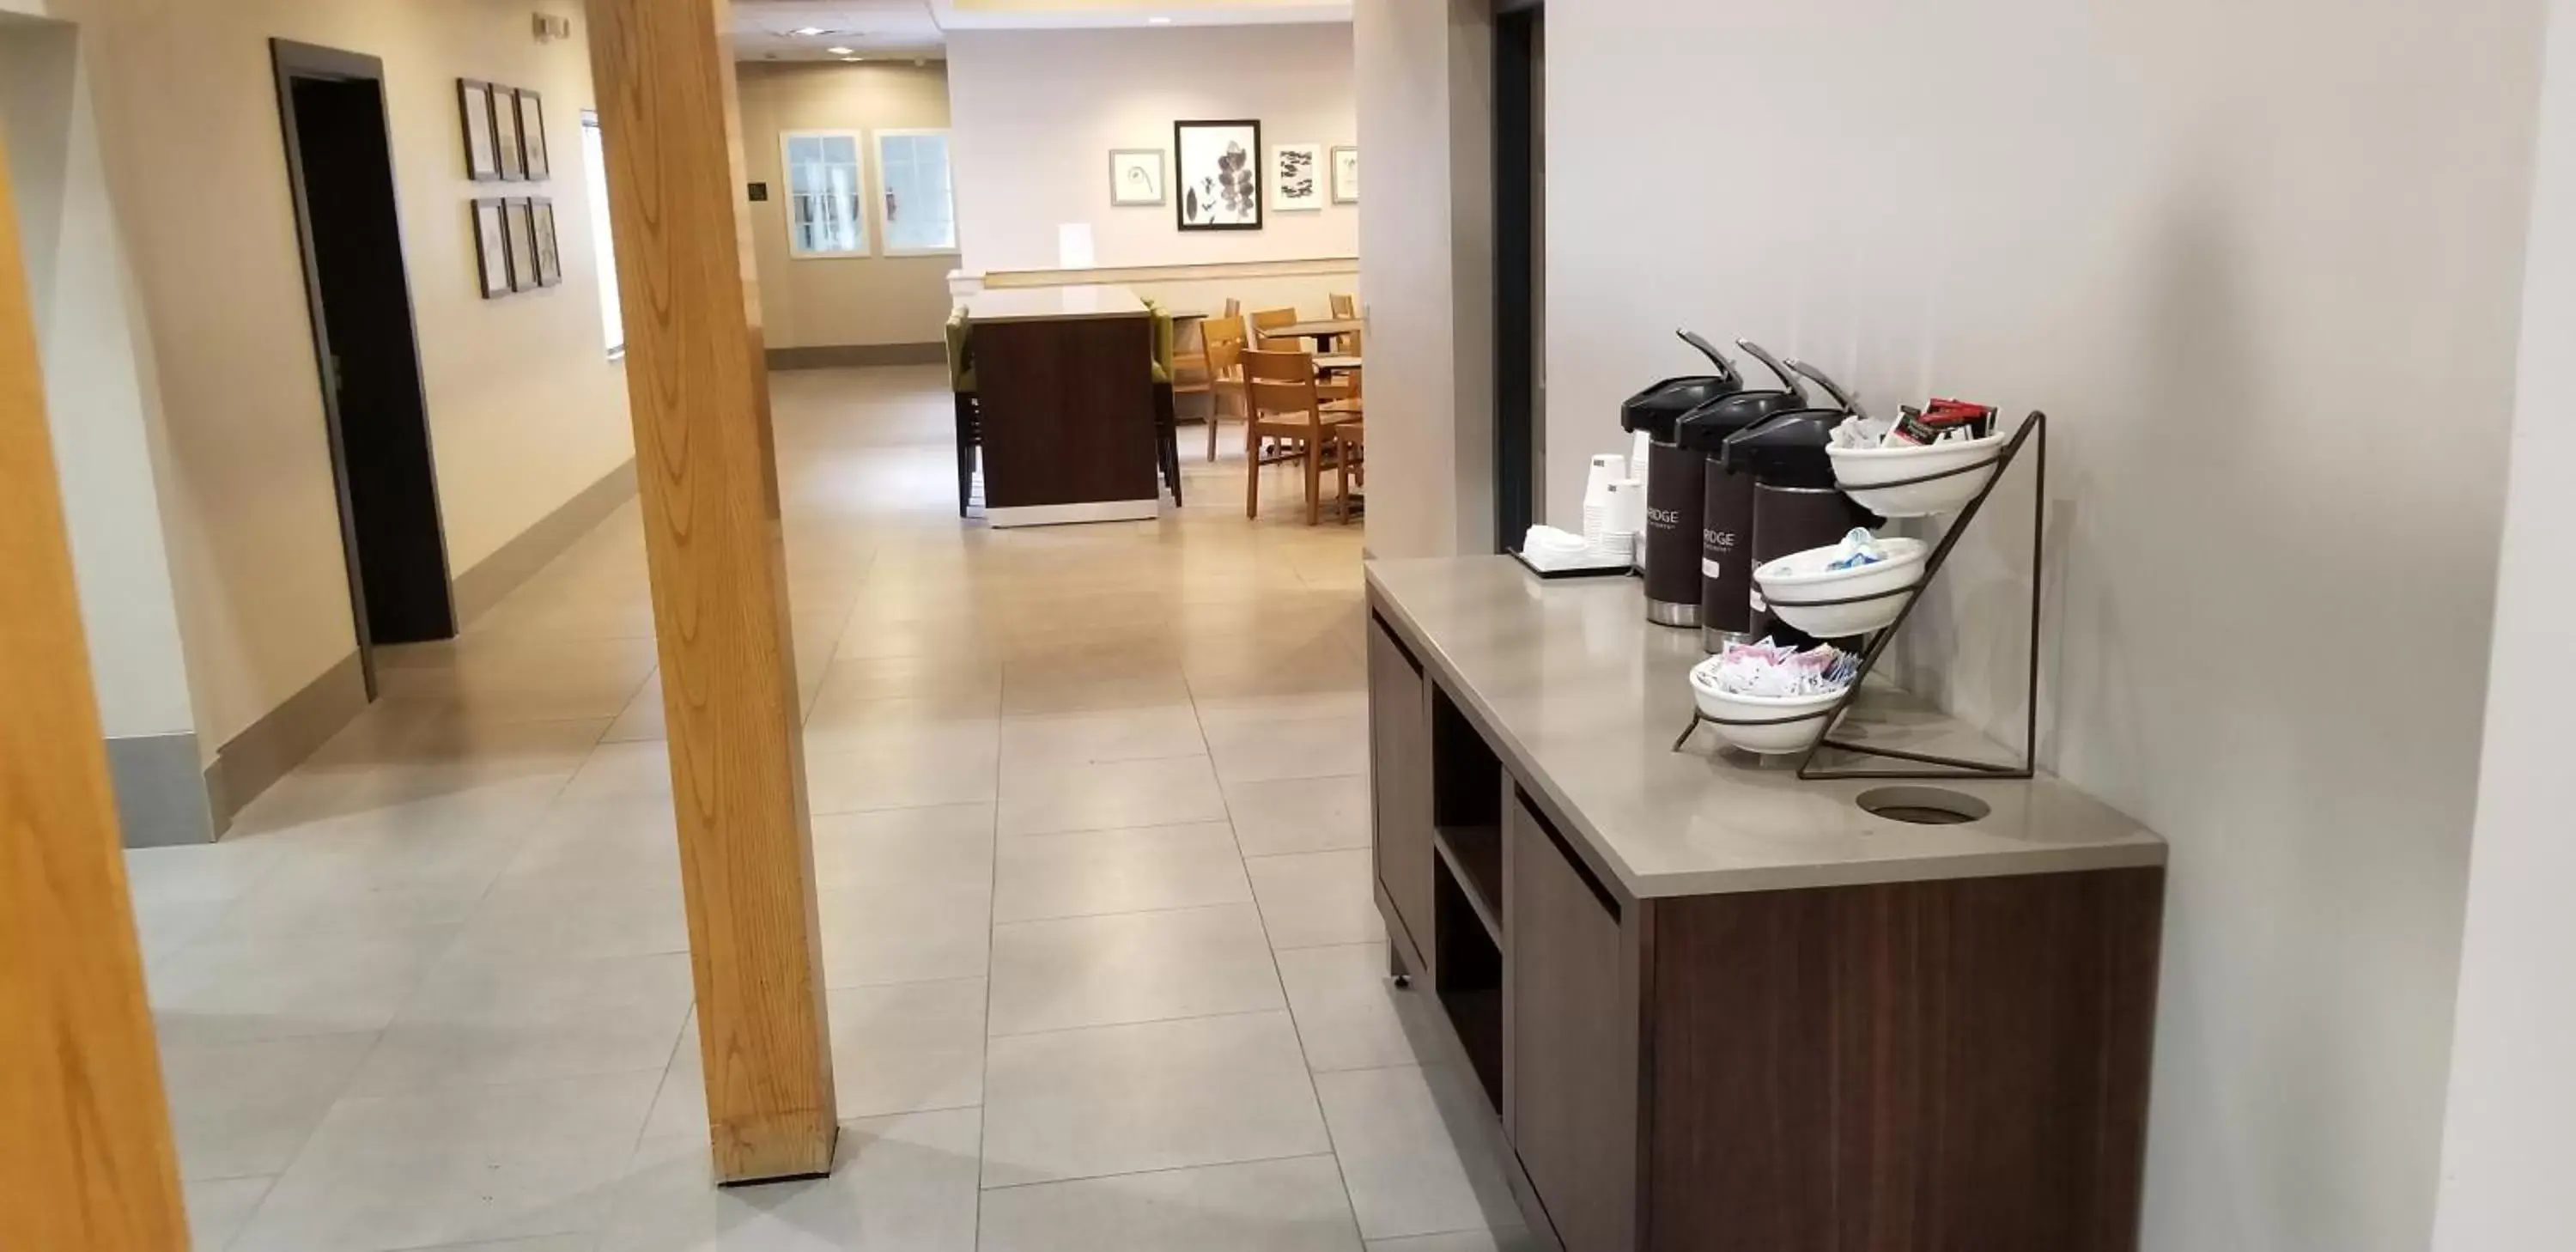 Coffee/tea facilities, Lobby/Reception in Country Inn & Suites by Radisson, Kalamazoo, MI